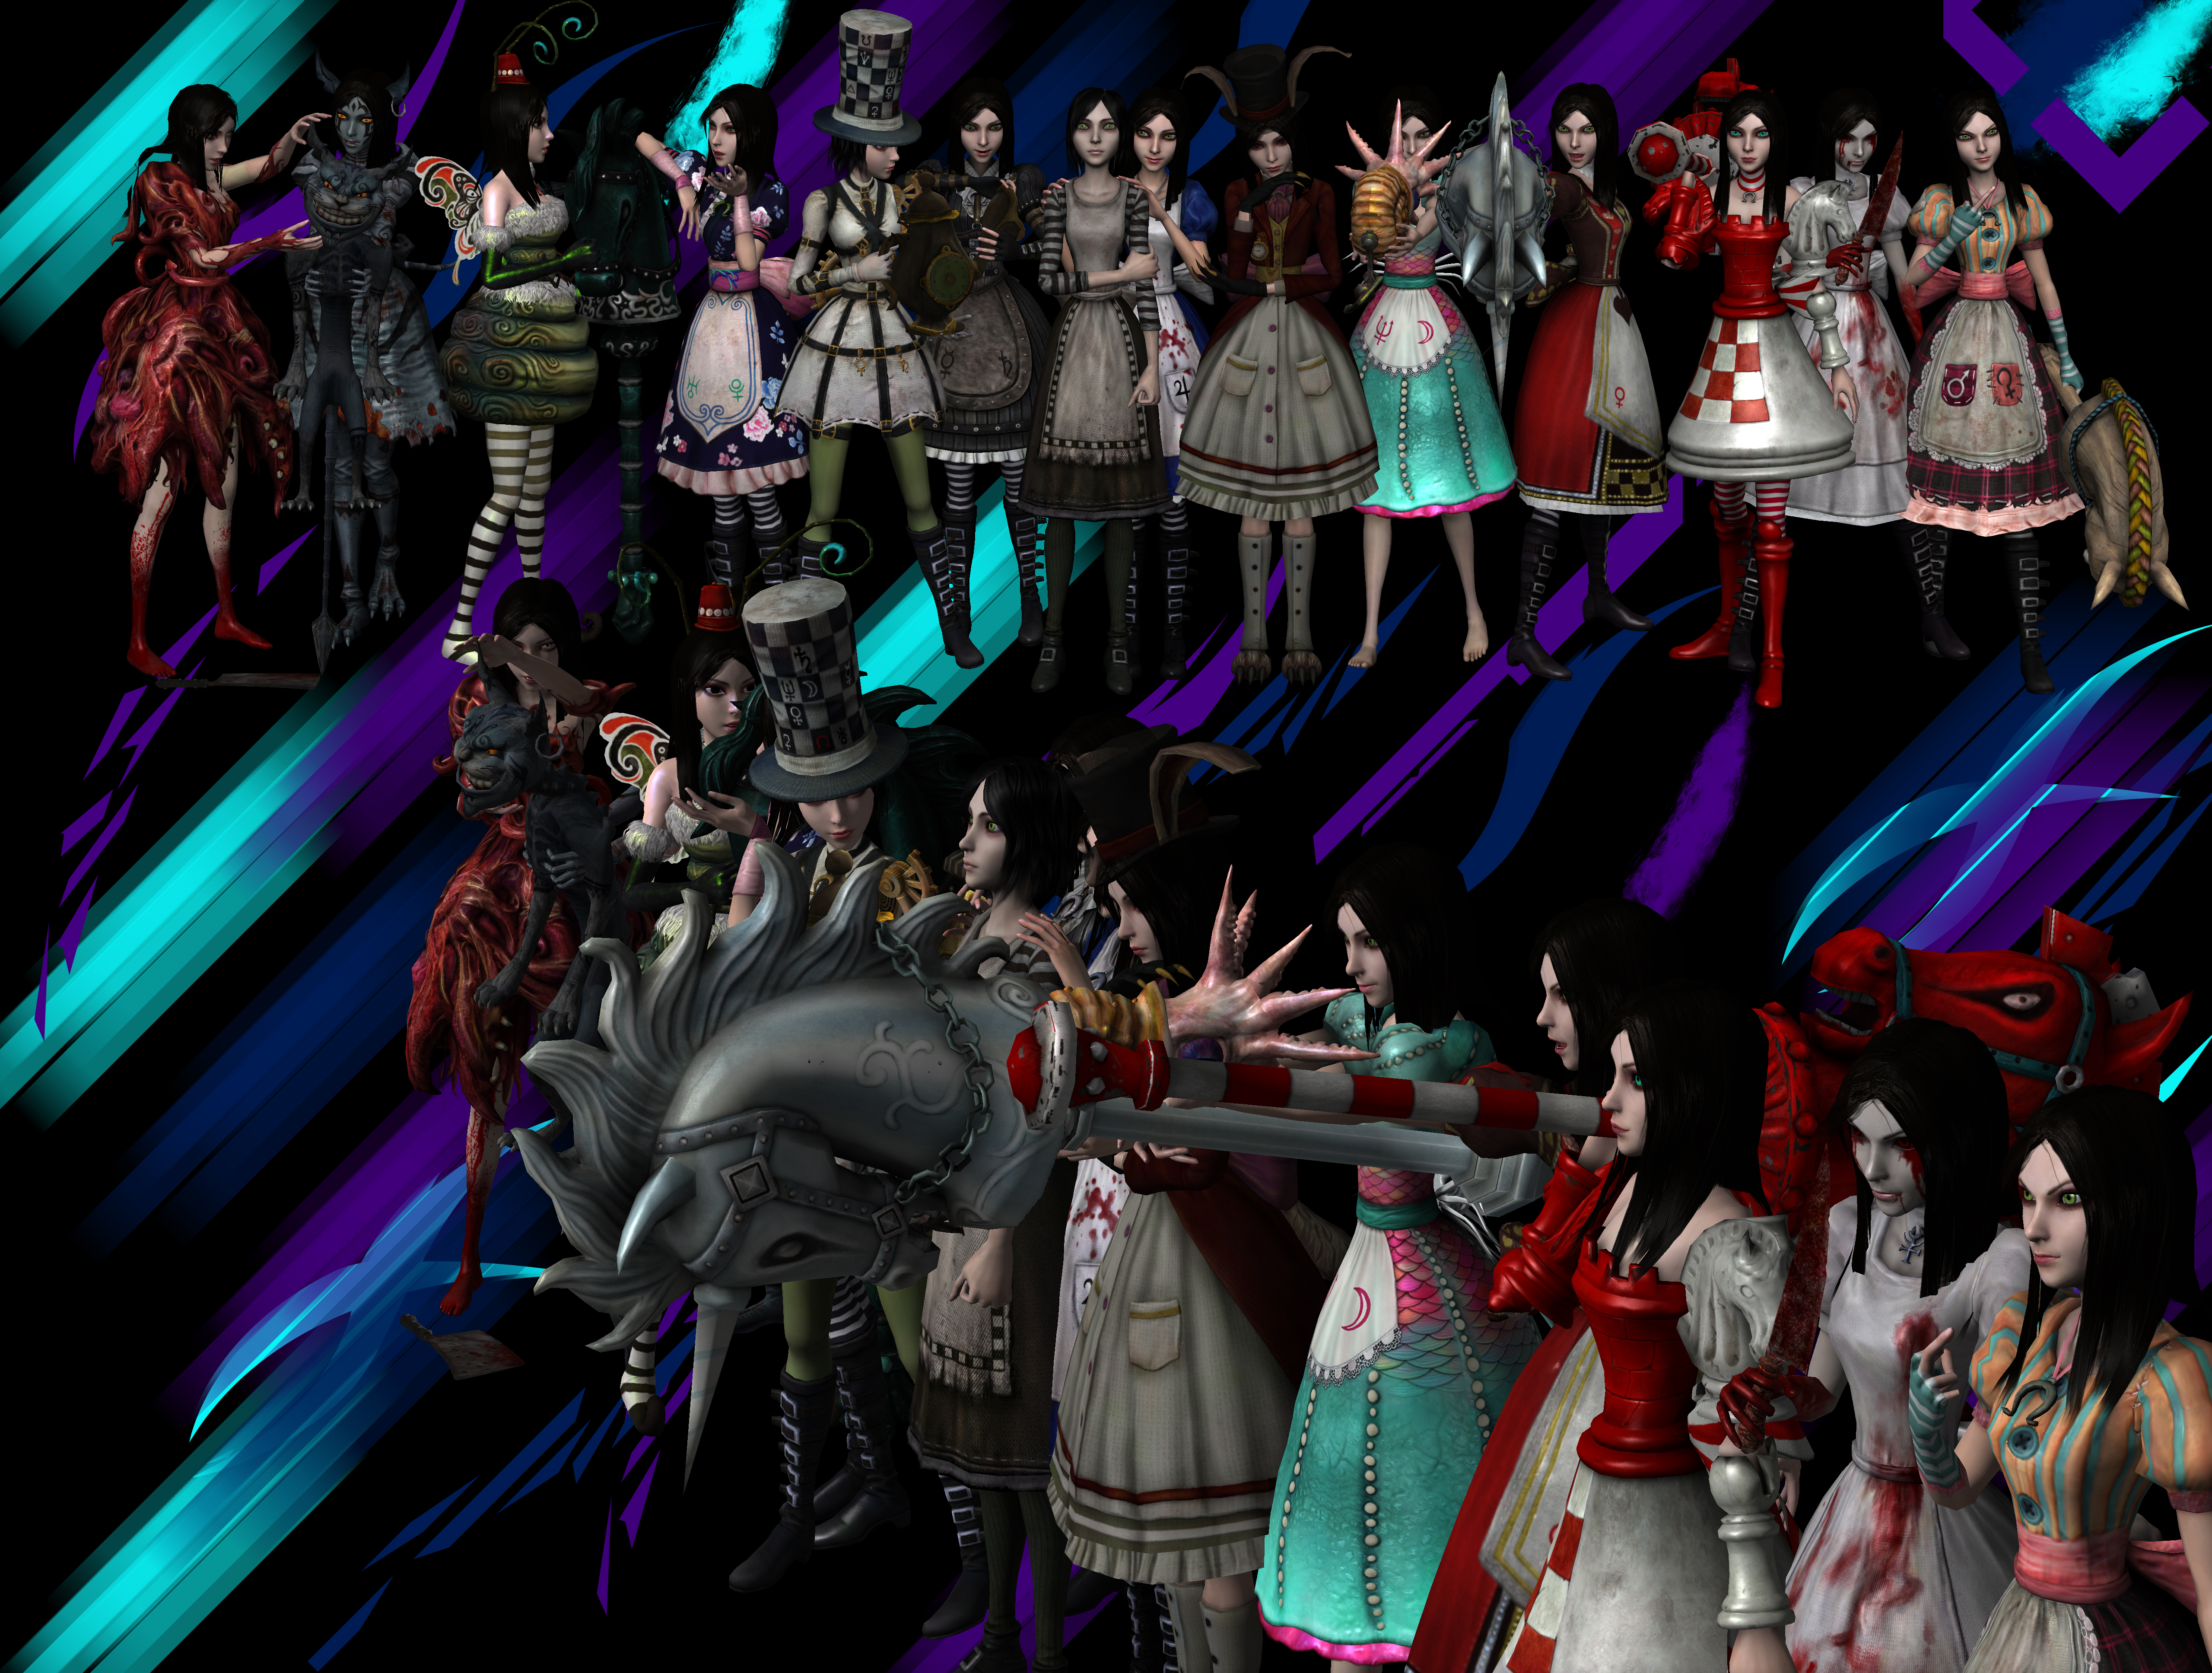 Alice Madness Returns - Steamdress outfit by VirginiaTuck on DeviantArt